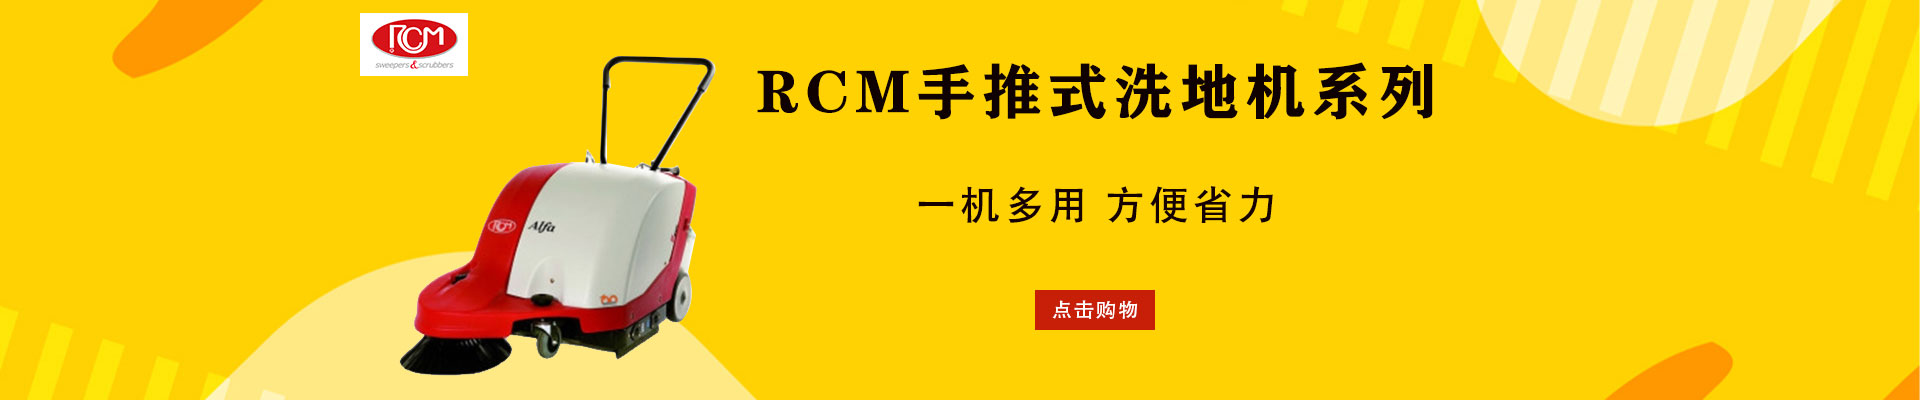 RCM|清洁设备